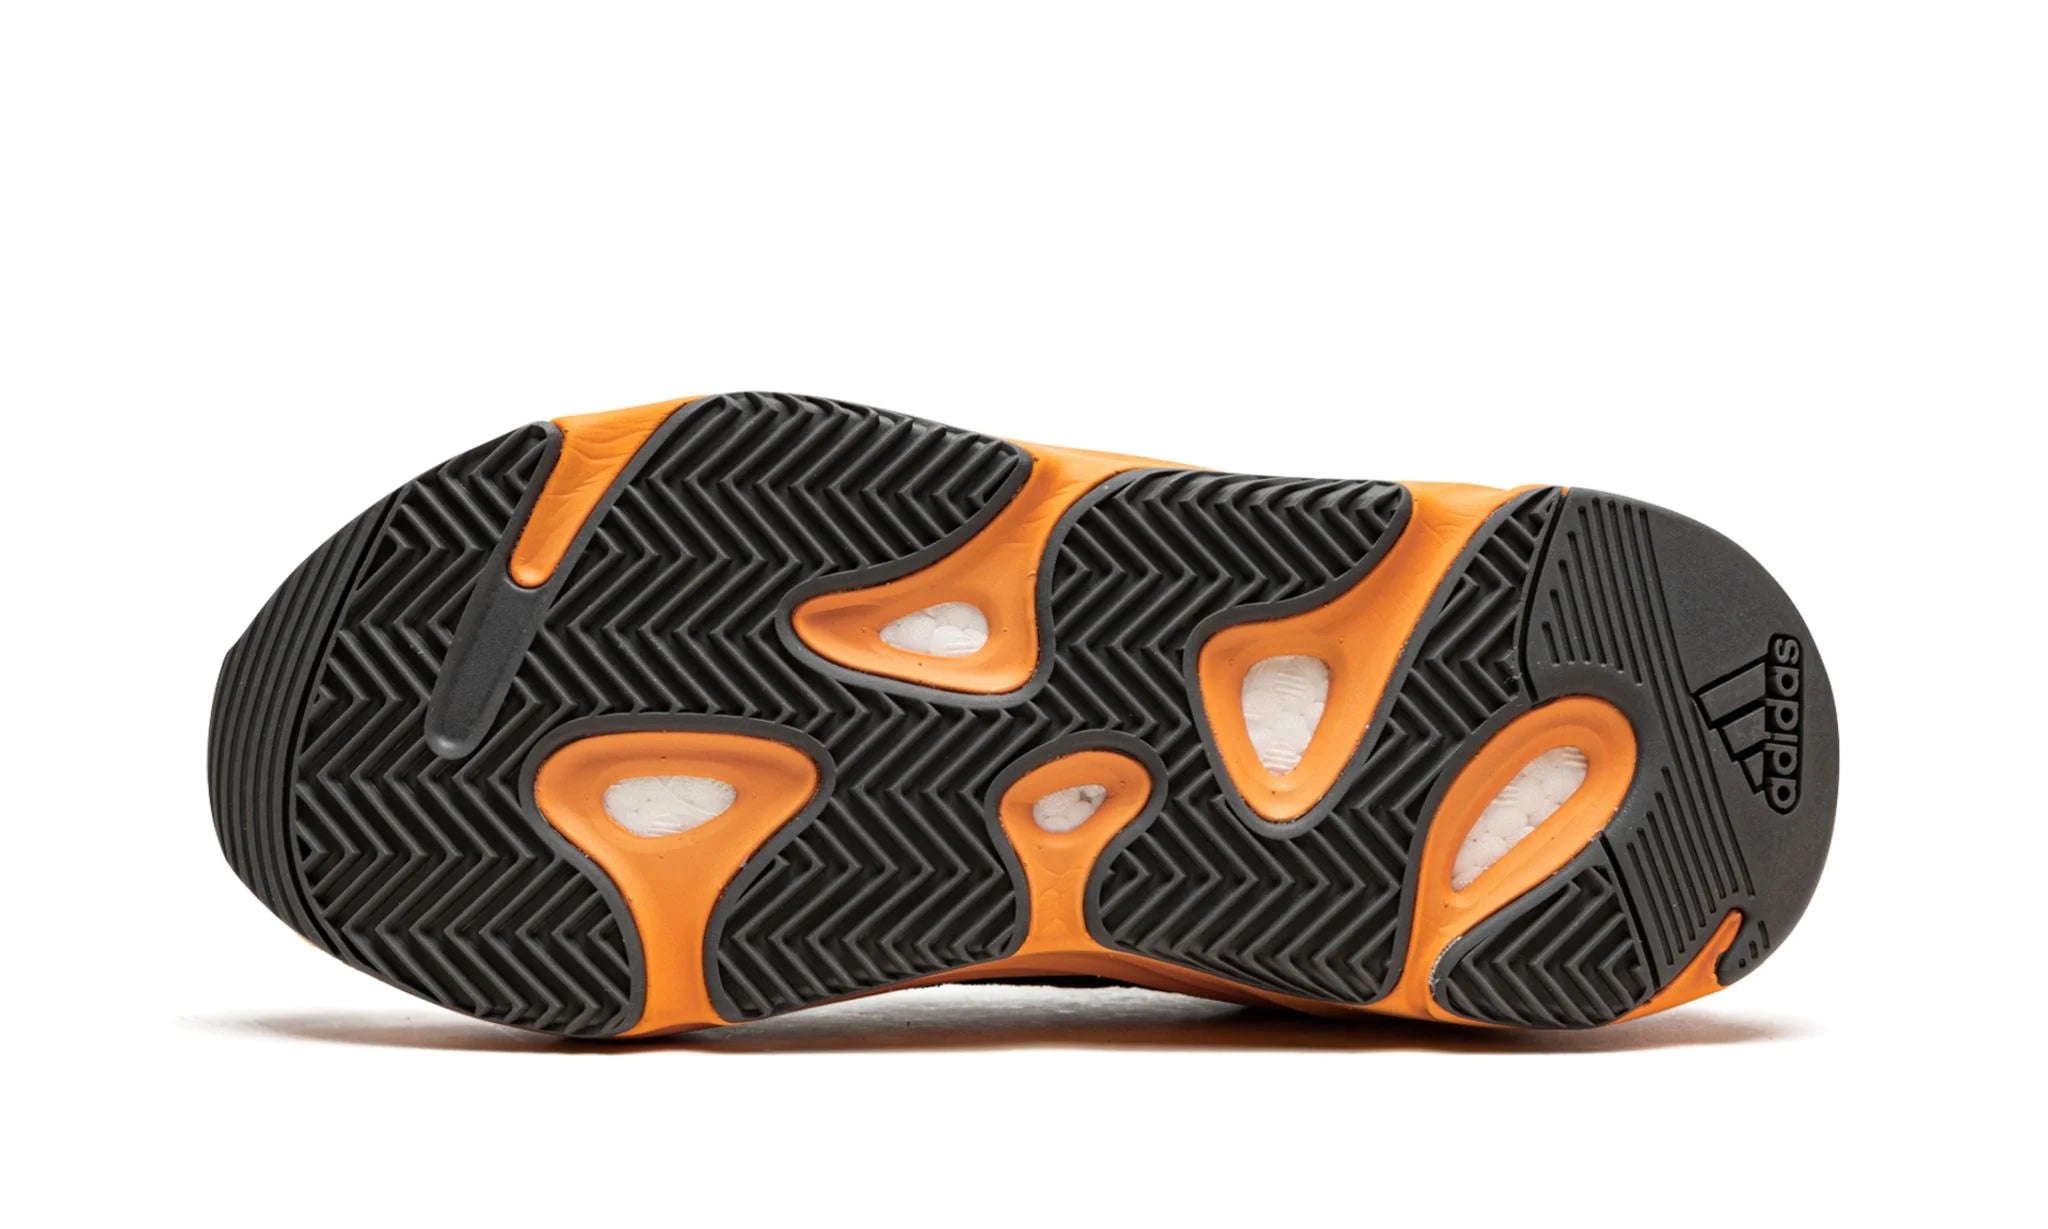 Adidas Yeezy Boost 700 Wash Orange - Yeezy 700 - Pirri